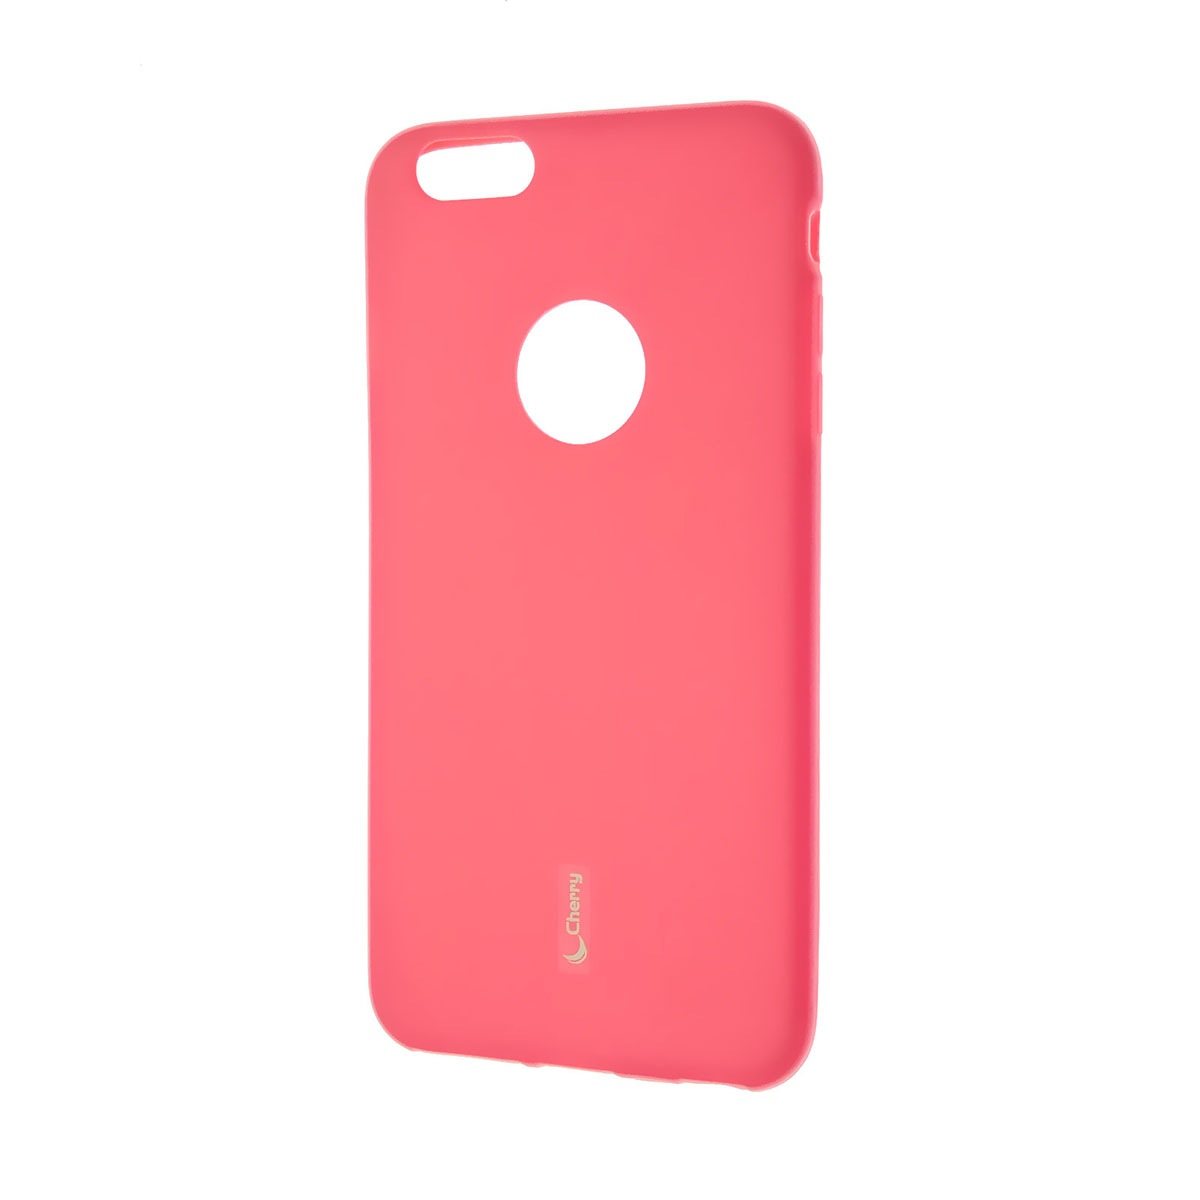 Чехол накладка Cherry для APPLE iPhone 6 Plus, 6S Plus, силикон, цвет розовый.